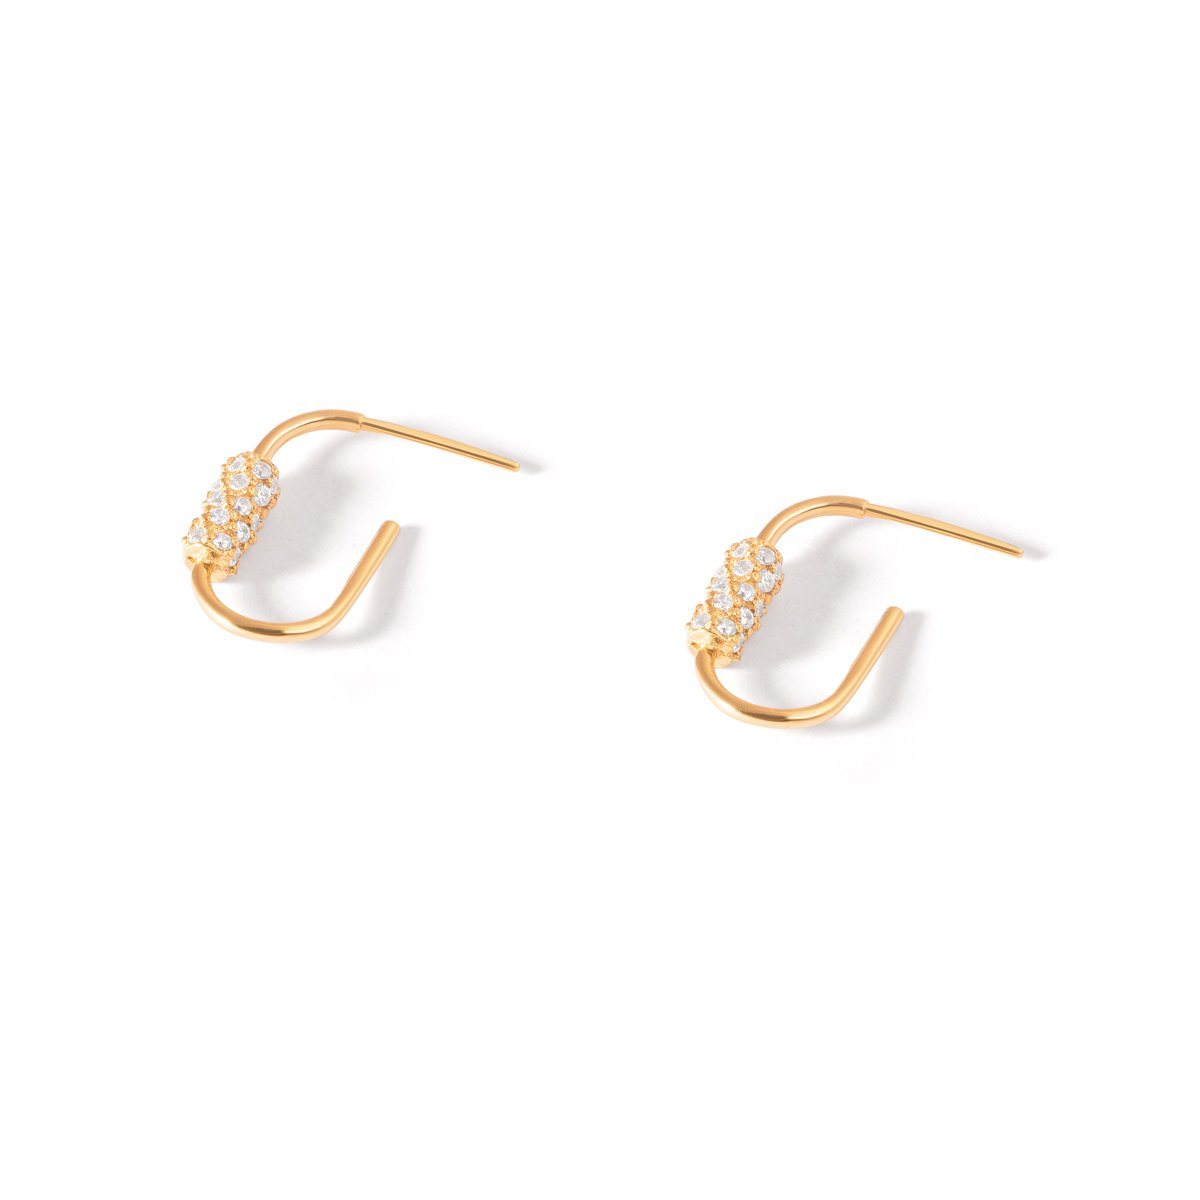 Pania cane gold earrings g